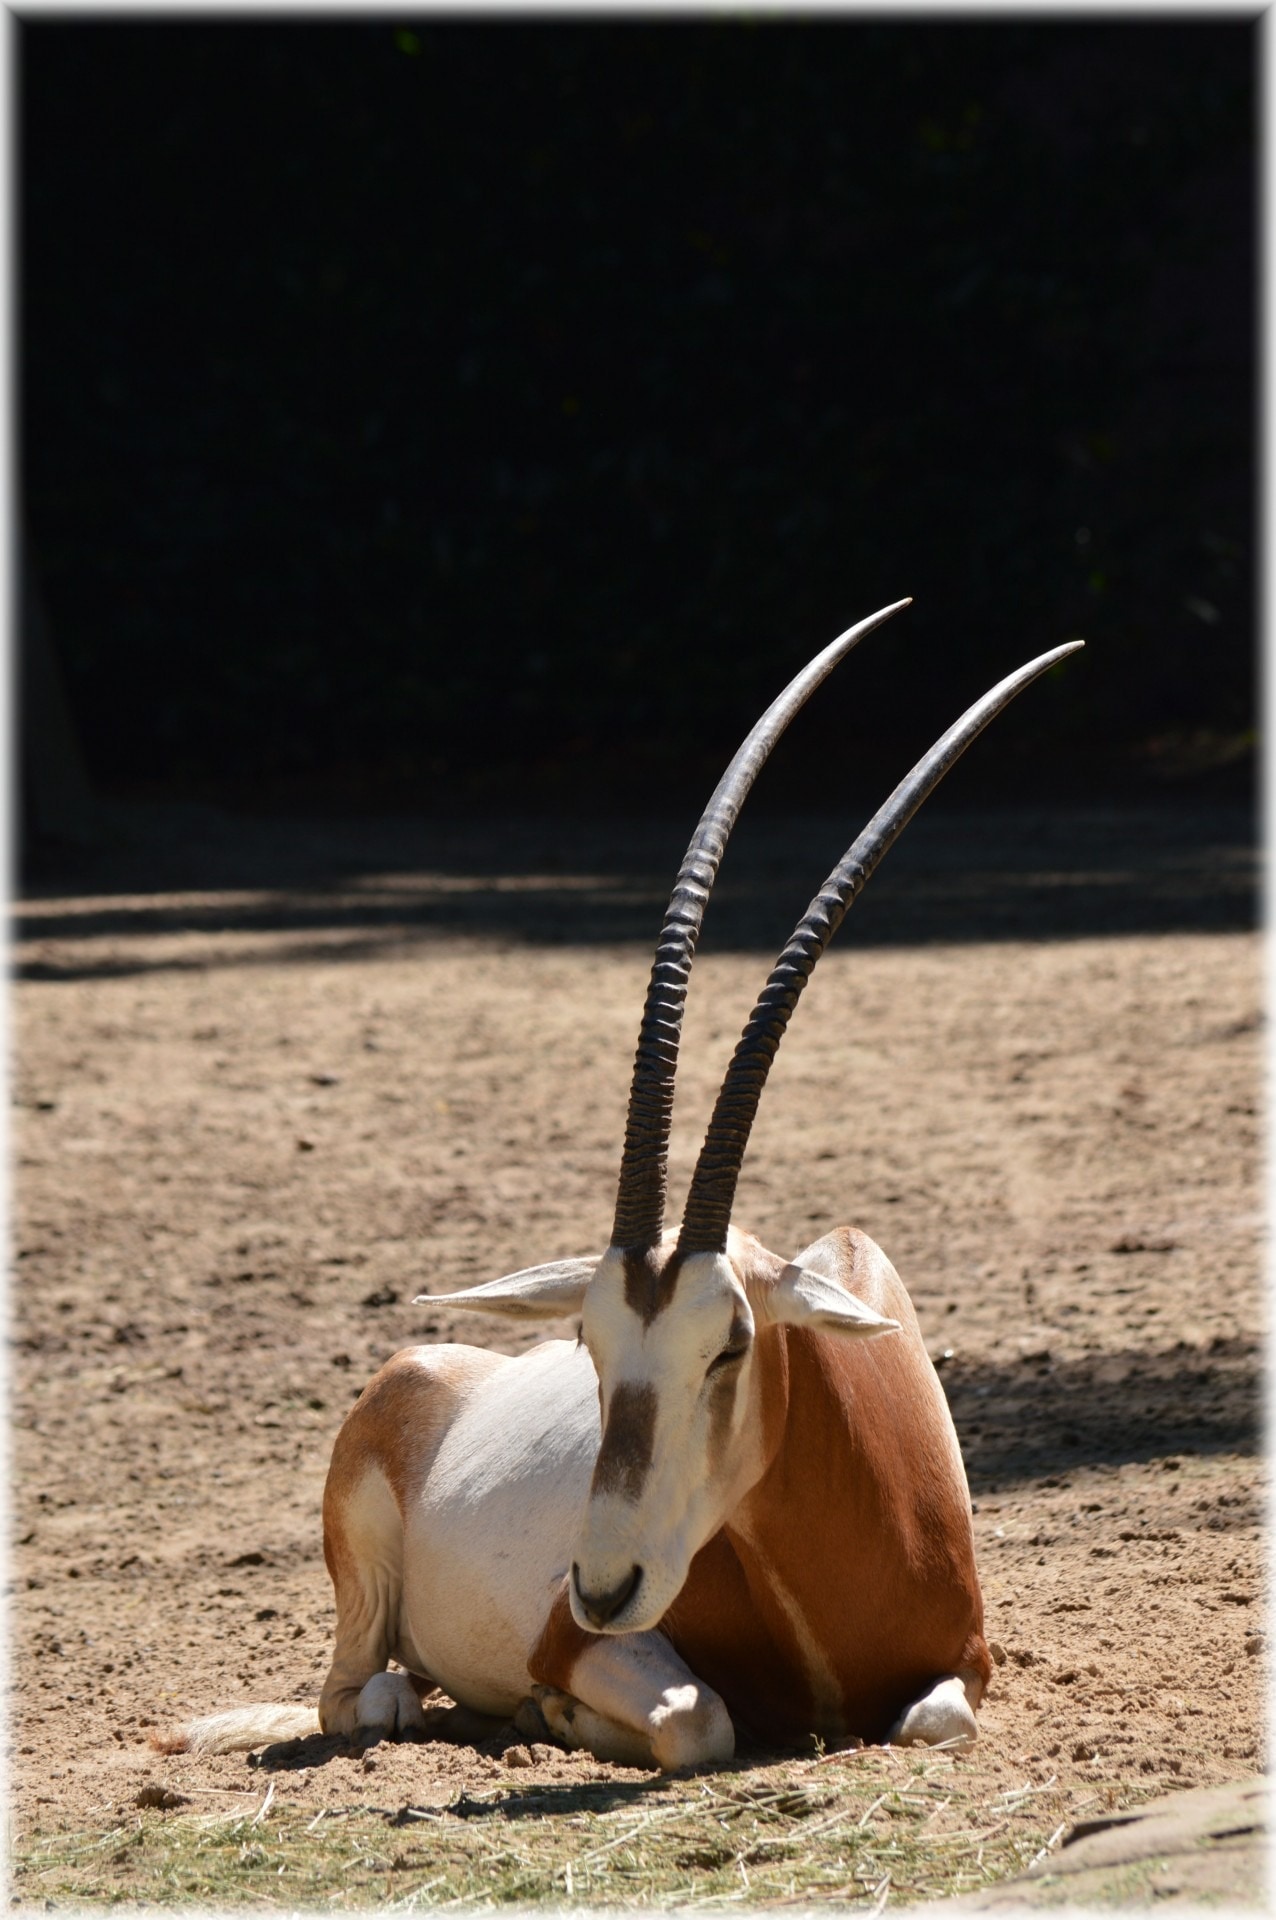 Antelope, Scimitar Oryx, Grass, Bushes, one animal, animal themes